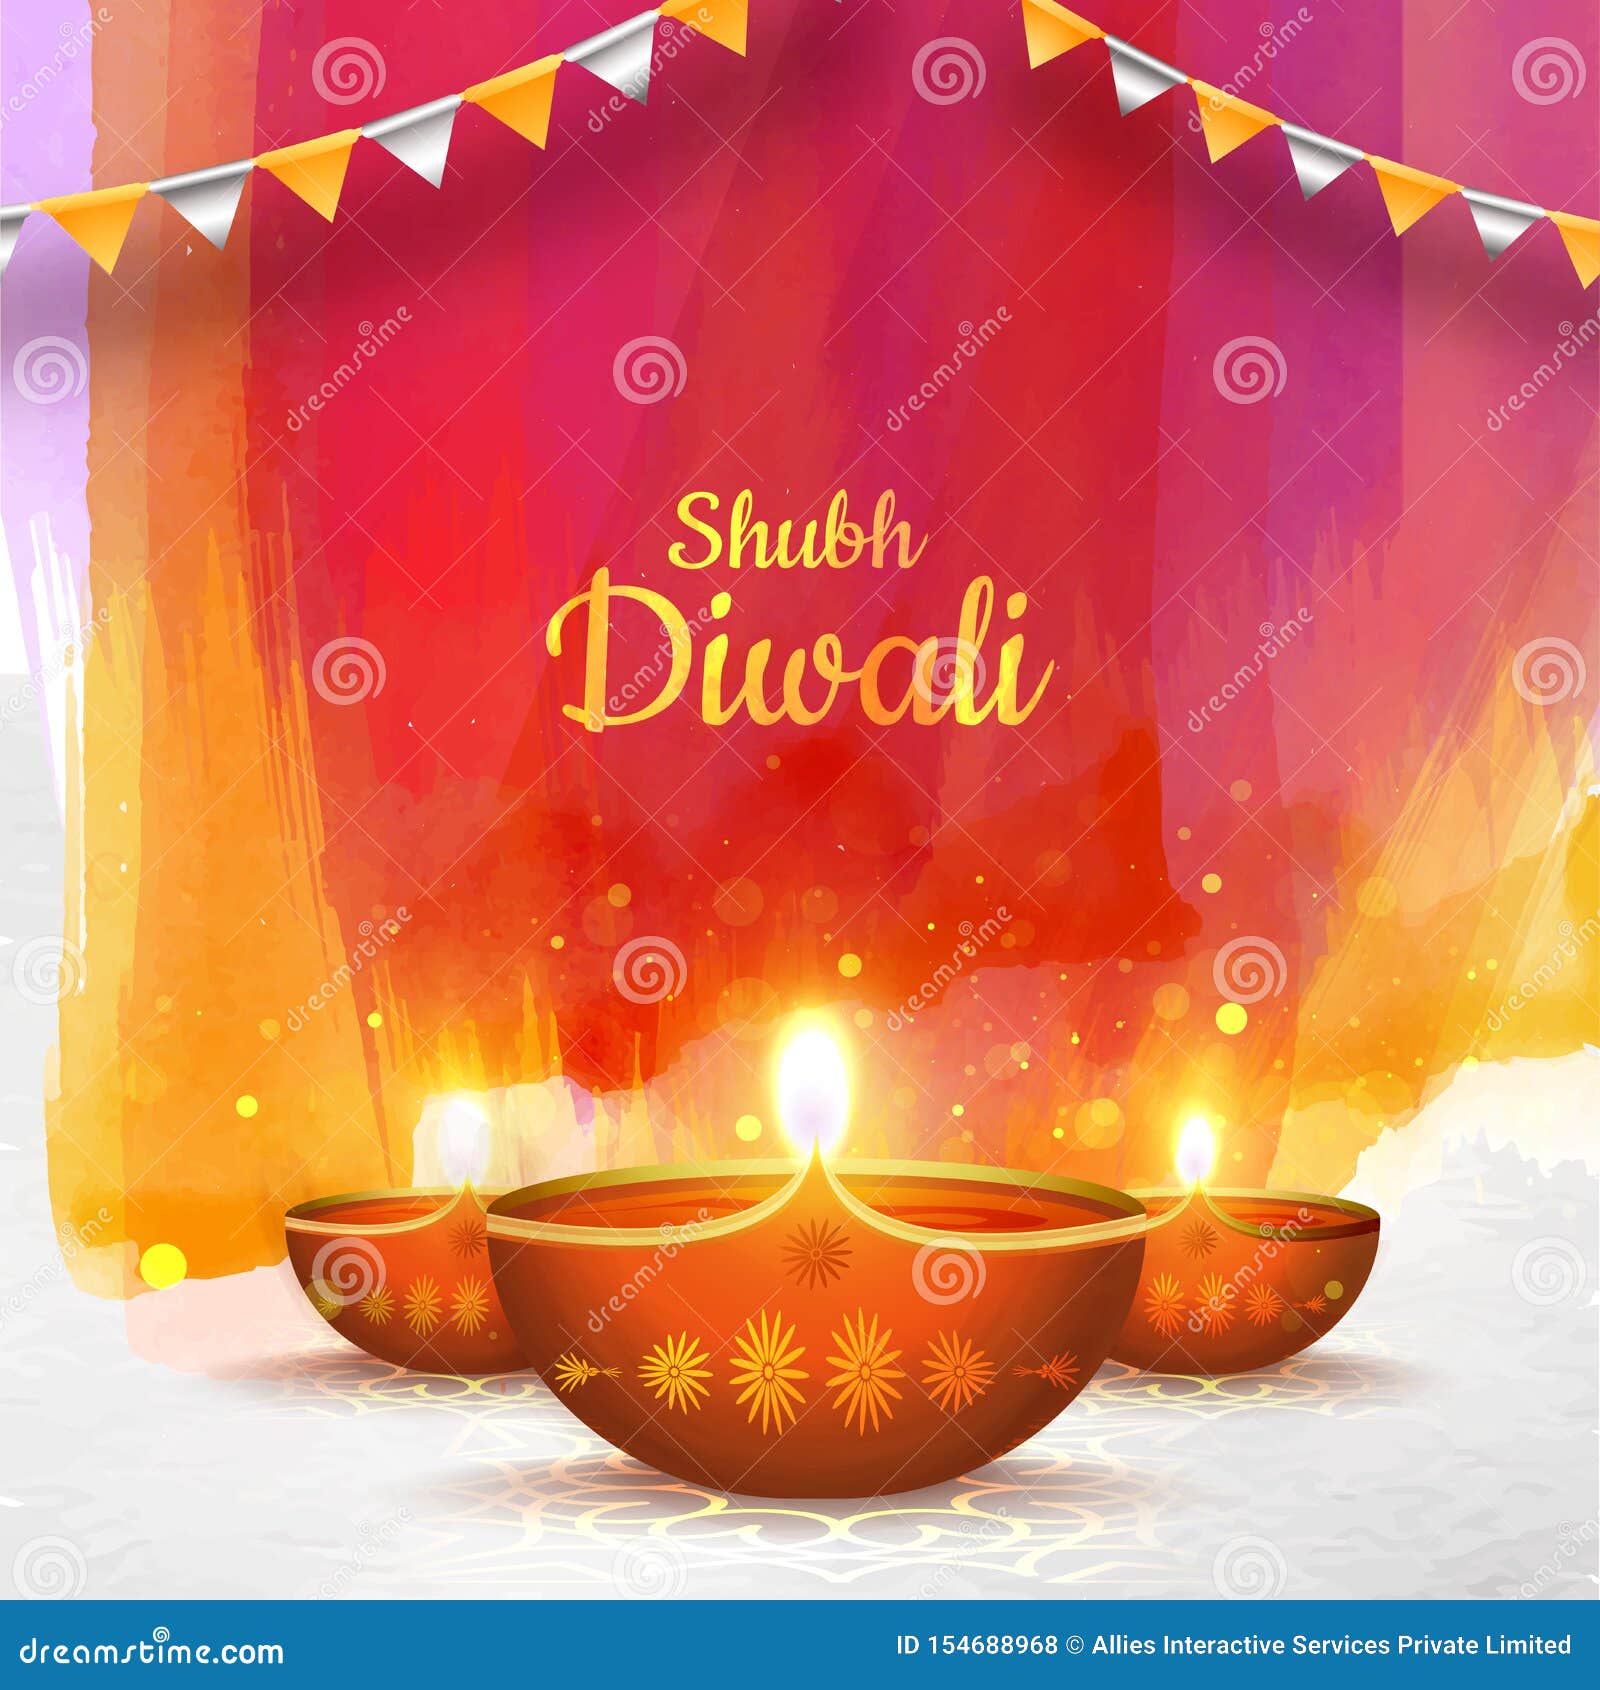 Shubh Diwali Poster or Banner Design with Illuminated Oil Lamp. Stock  Illustration - Illustration of invitation, illuminated: 154688968